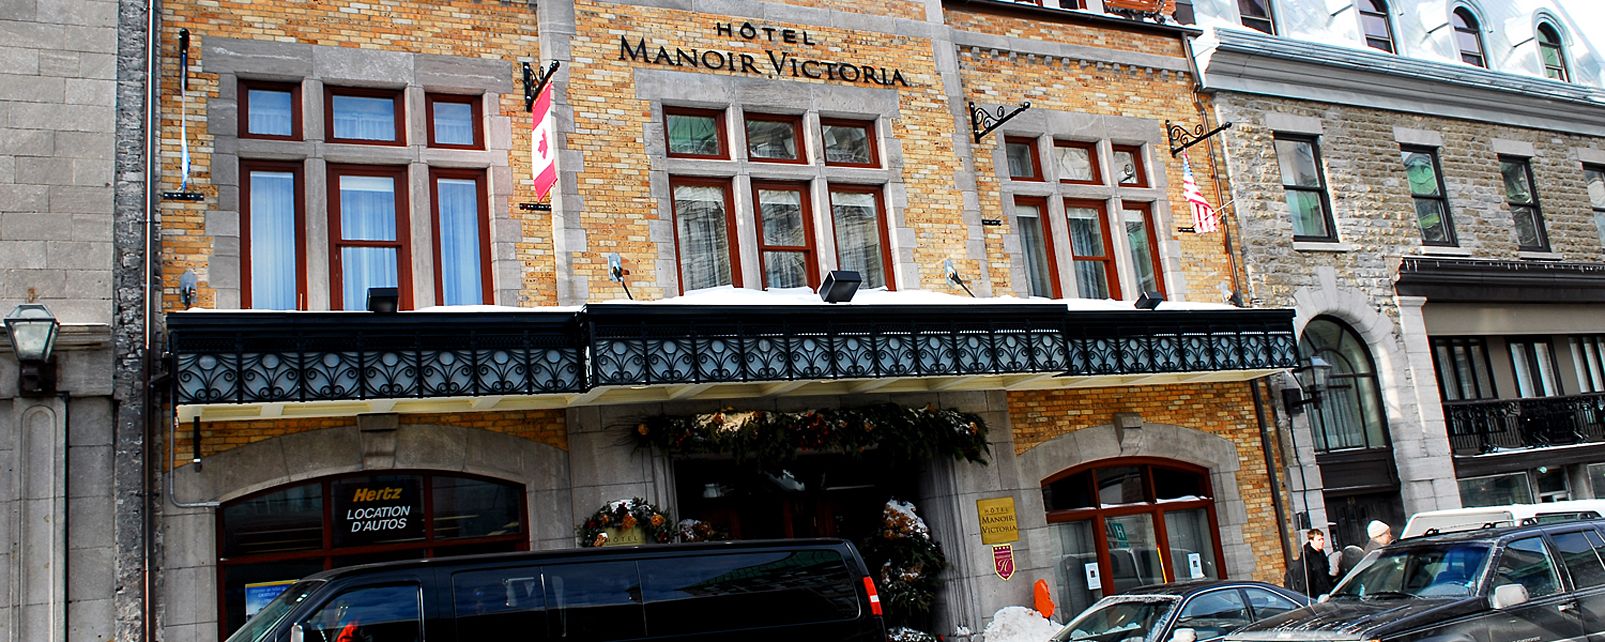 Hôtel Manoir Victoria